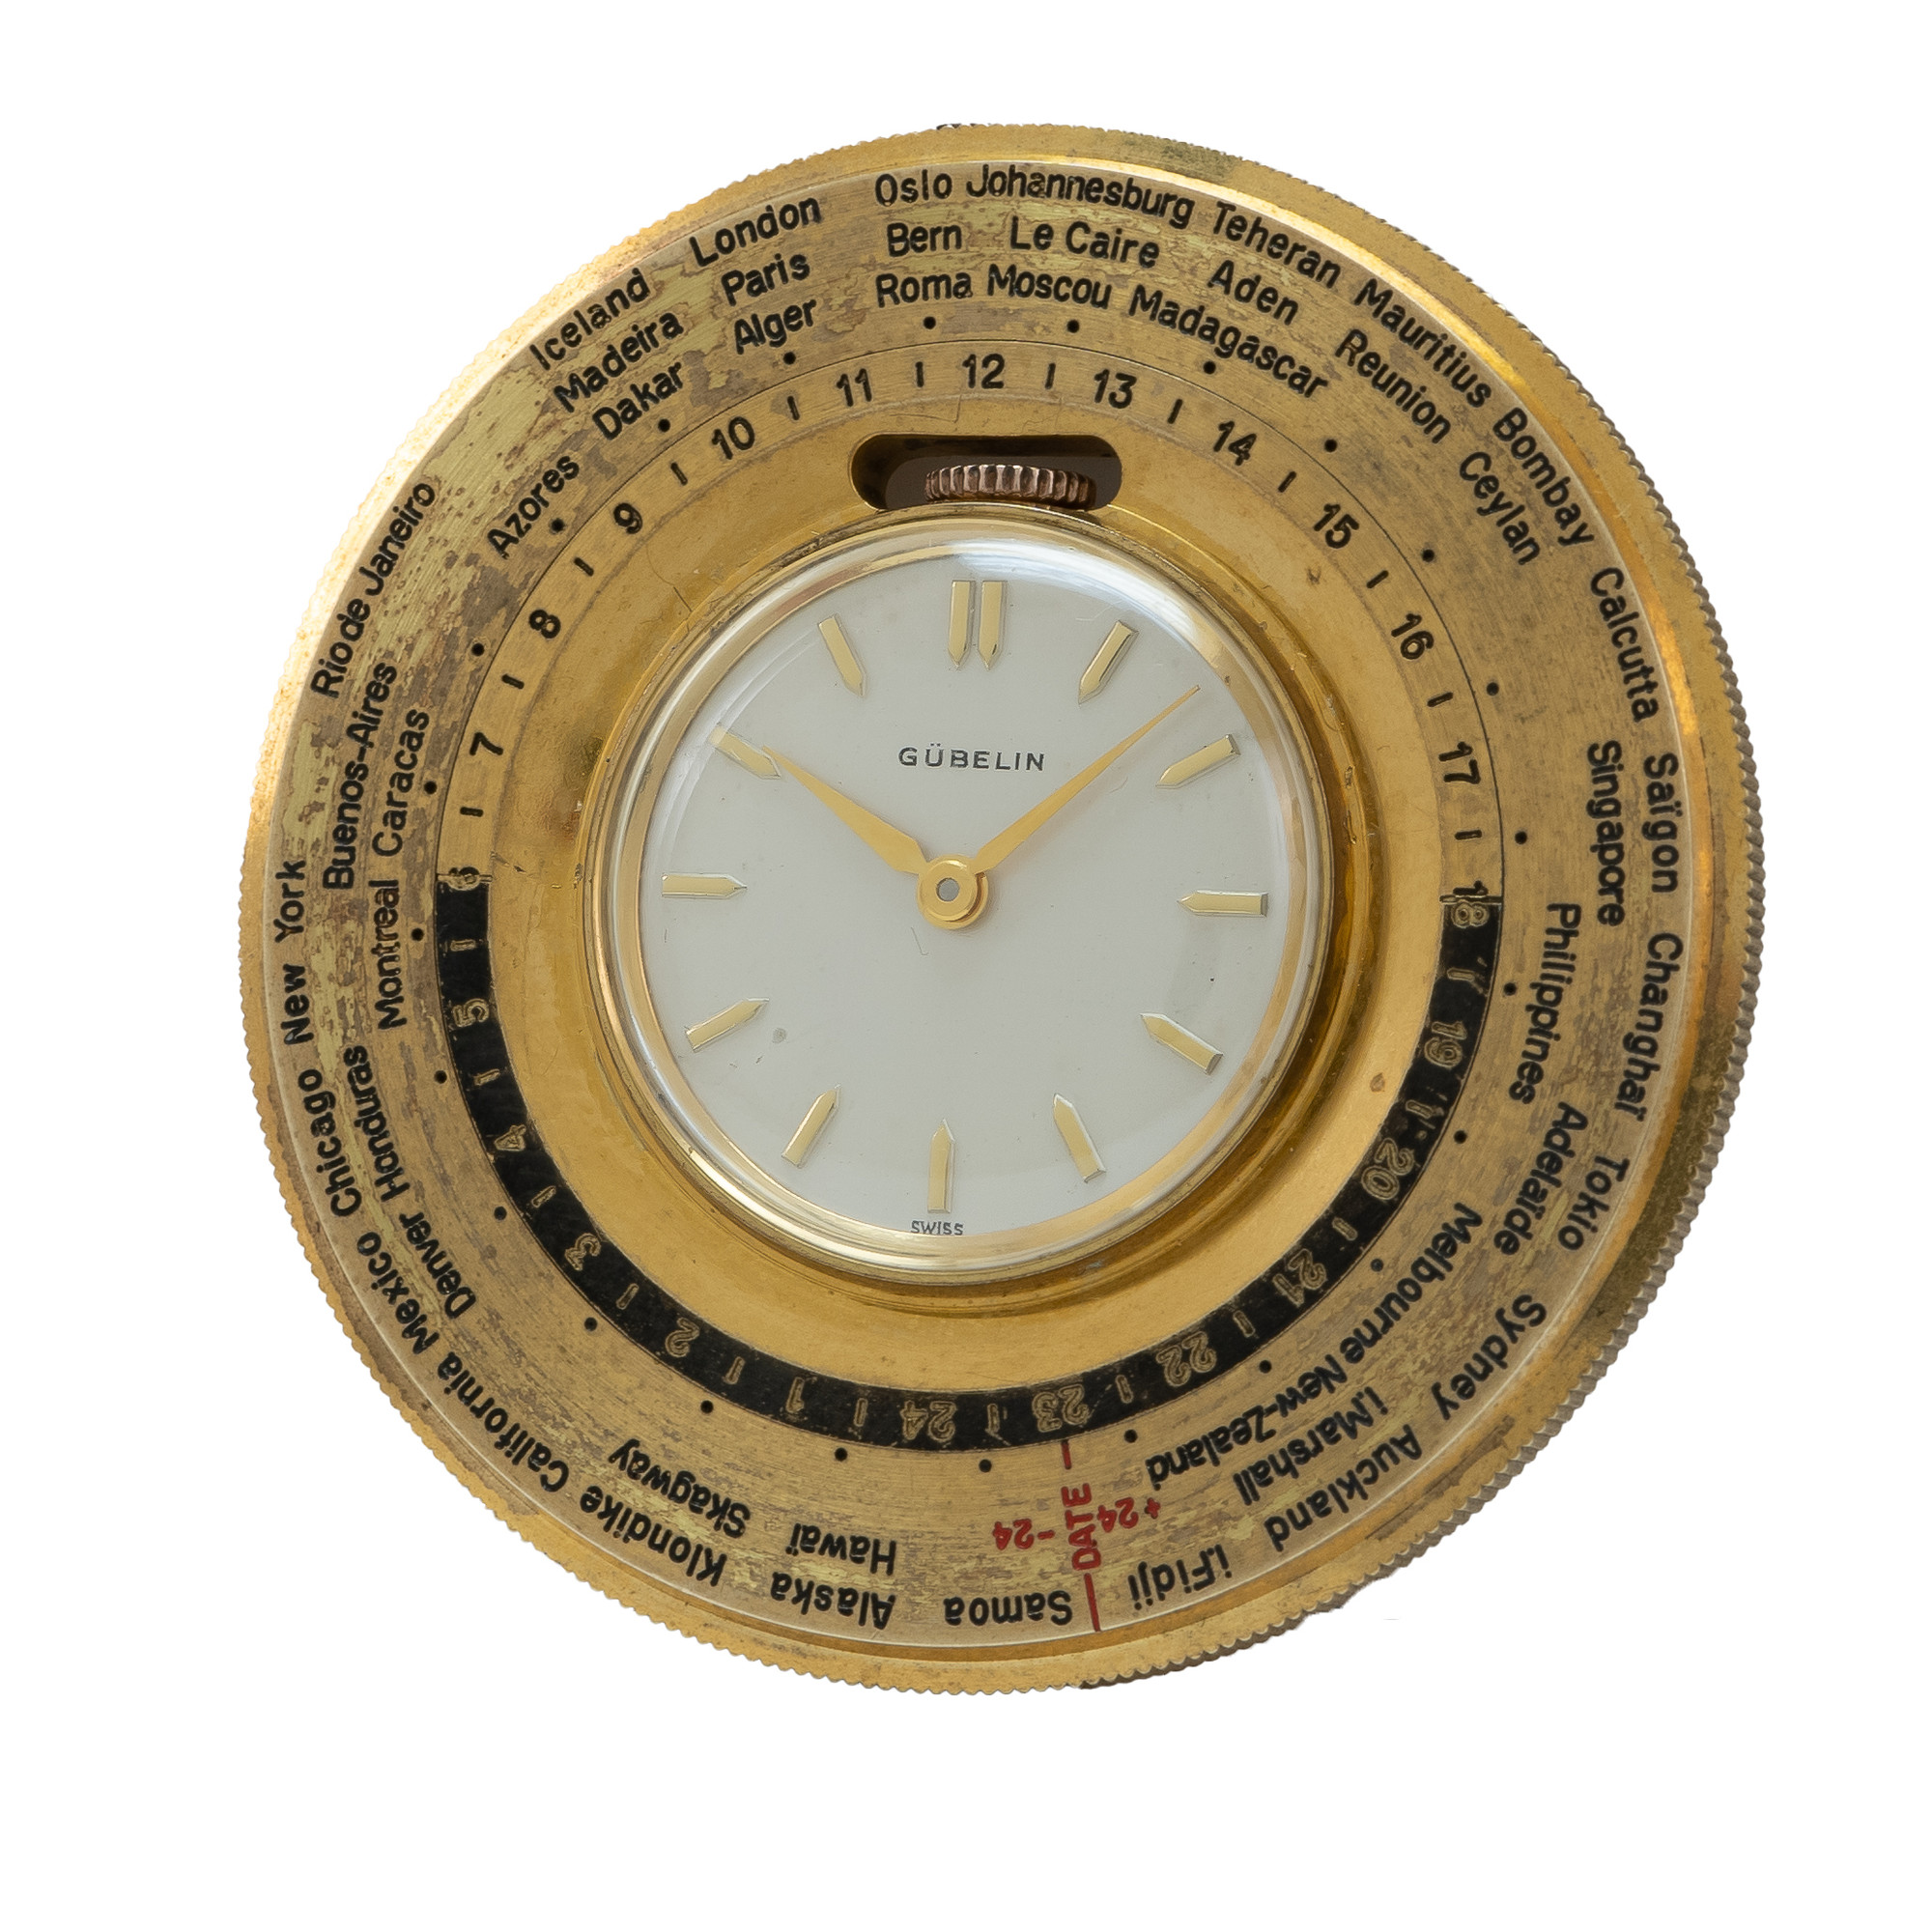 Gübelin 1960's World Time Watch *Vintage* - Inventory 4901